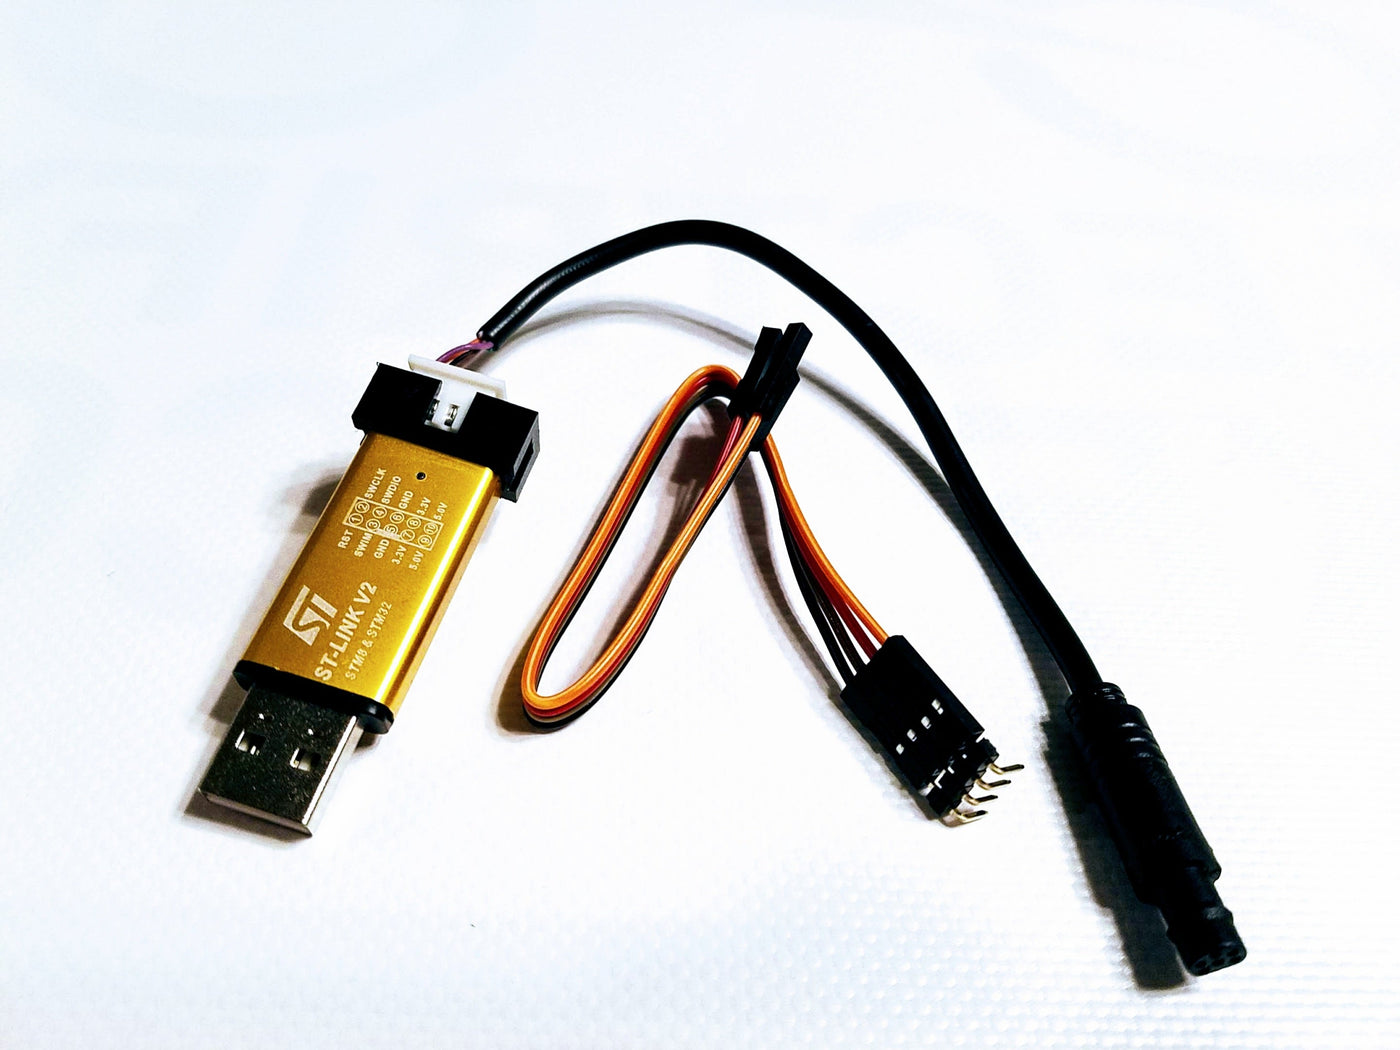 ST-Link V2 USB programming kit for TSDZ2 Open Source Firmware (OSF) Upgrade